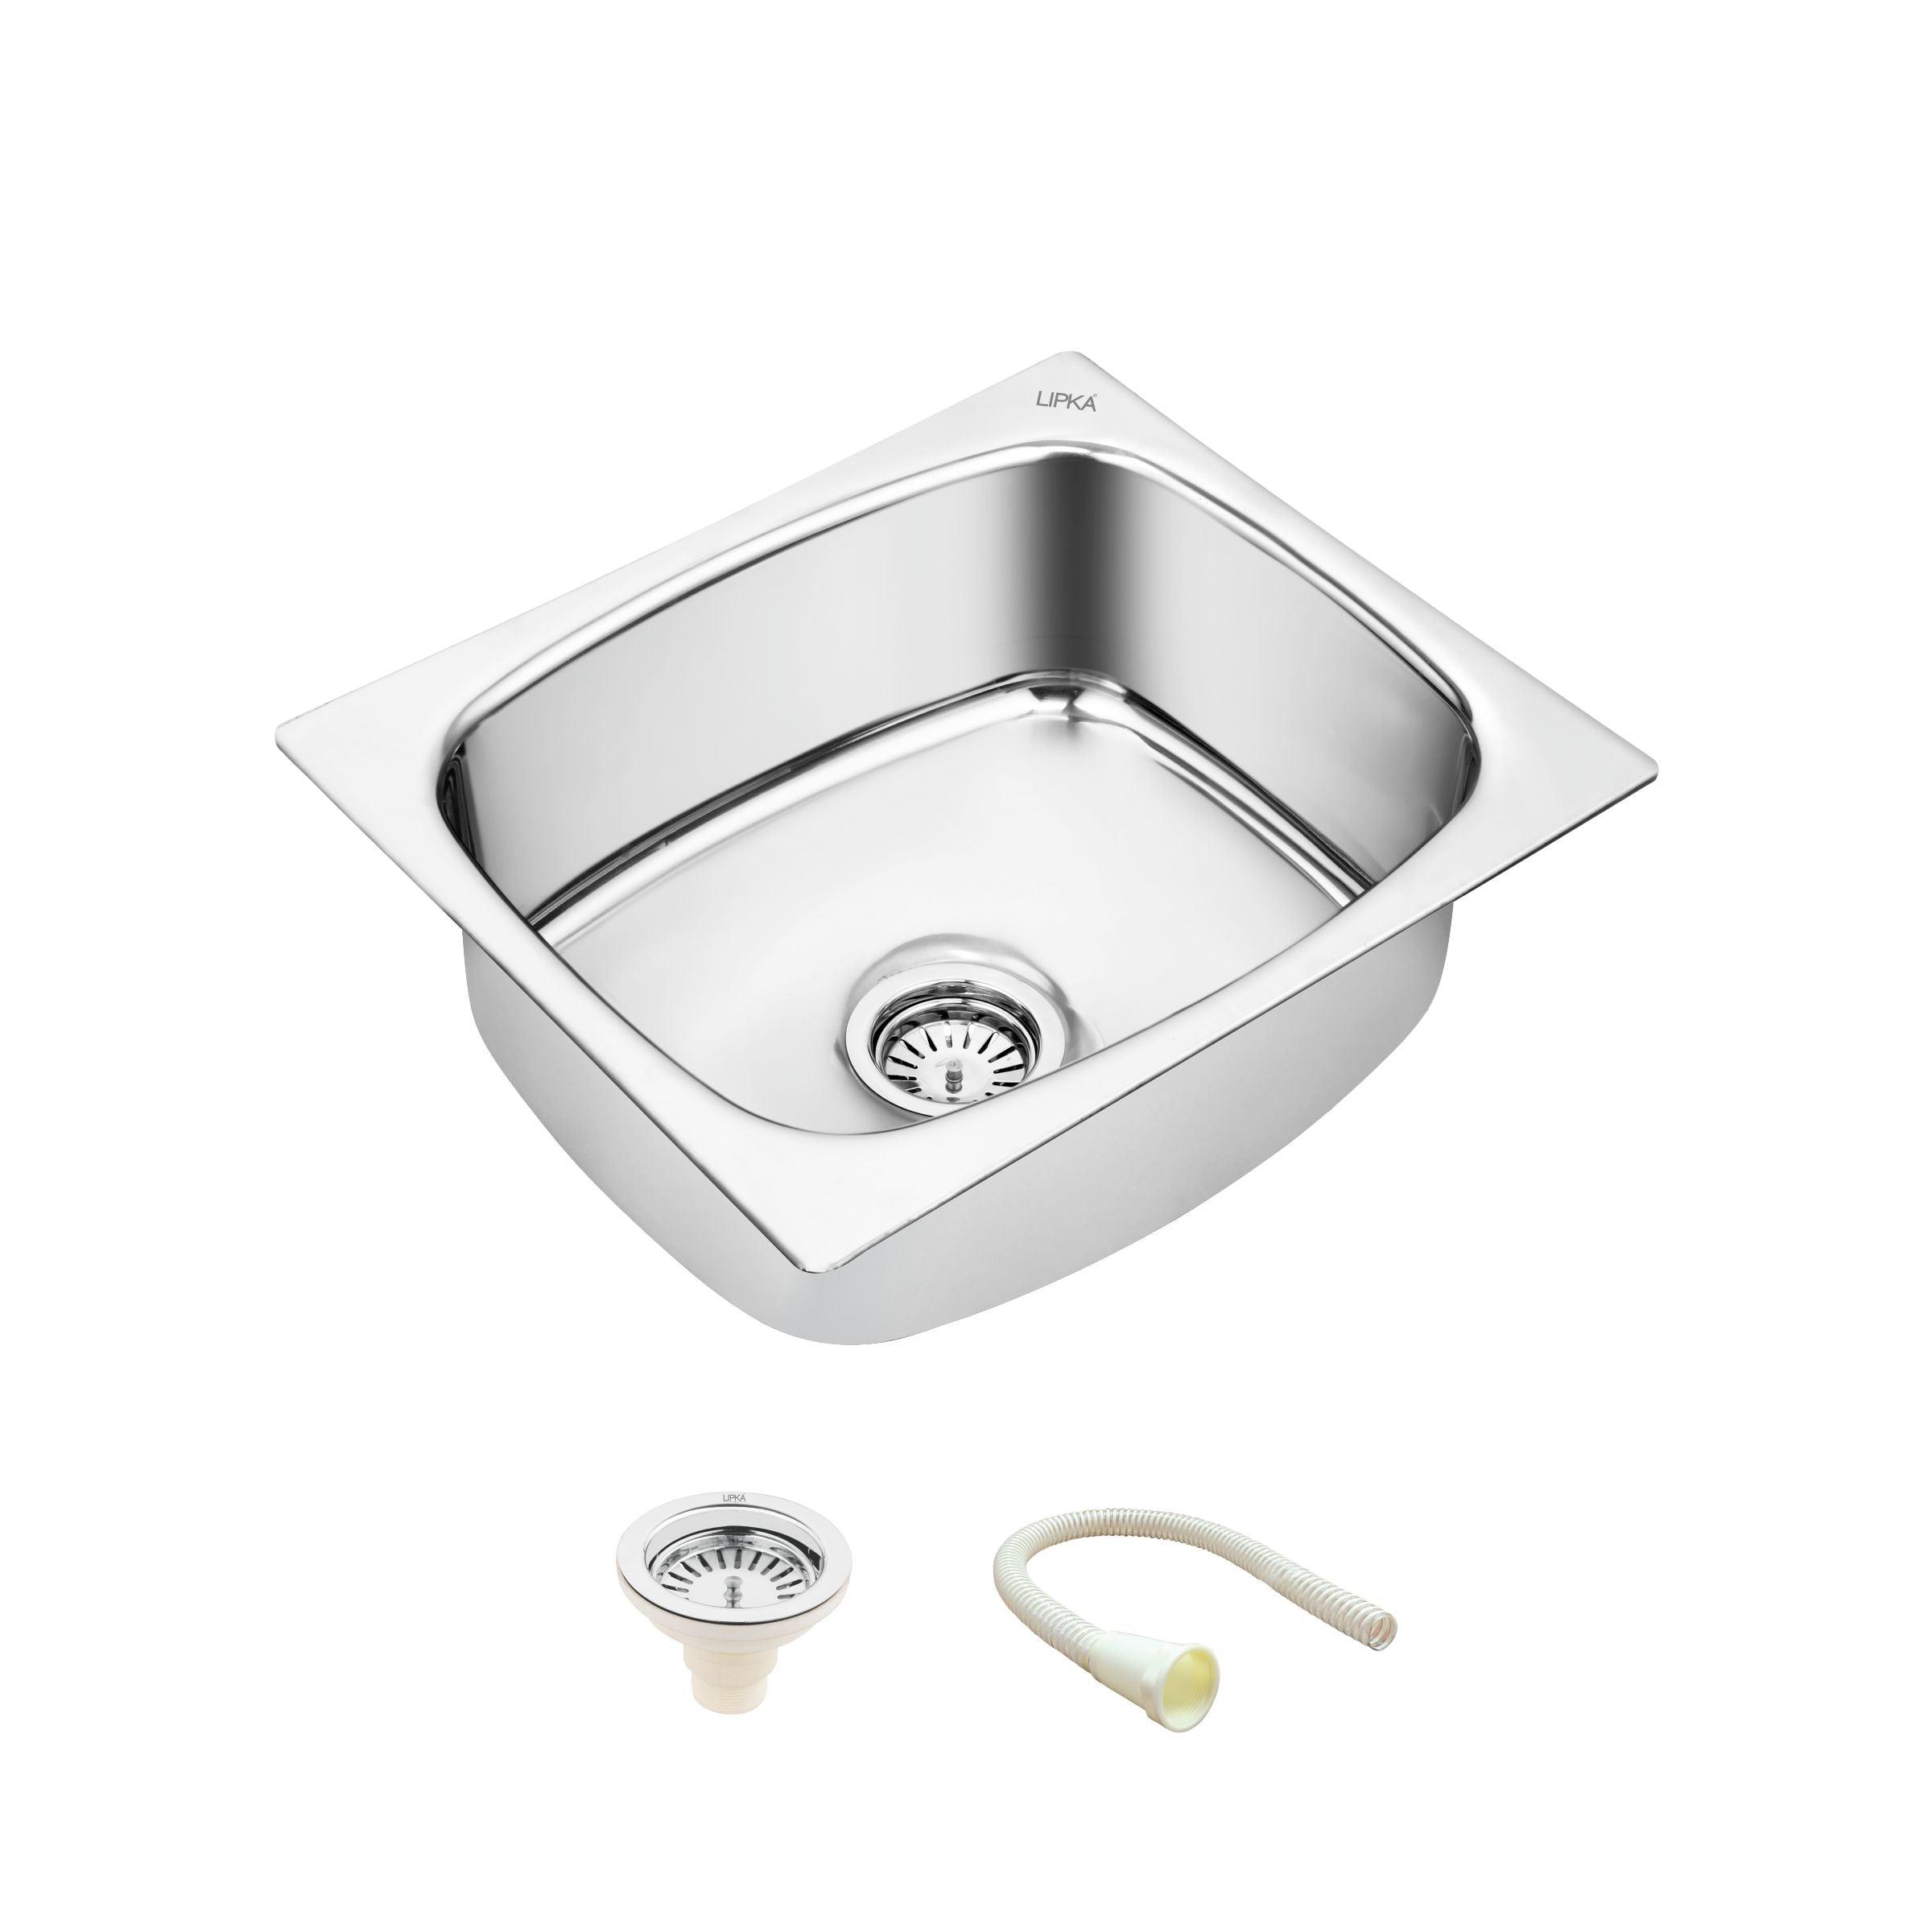 Silver Range Round Single Bowl Kitchen Sink (18 x 16 x 8 Inches) - LIPKA - Lipka Home